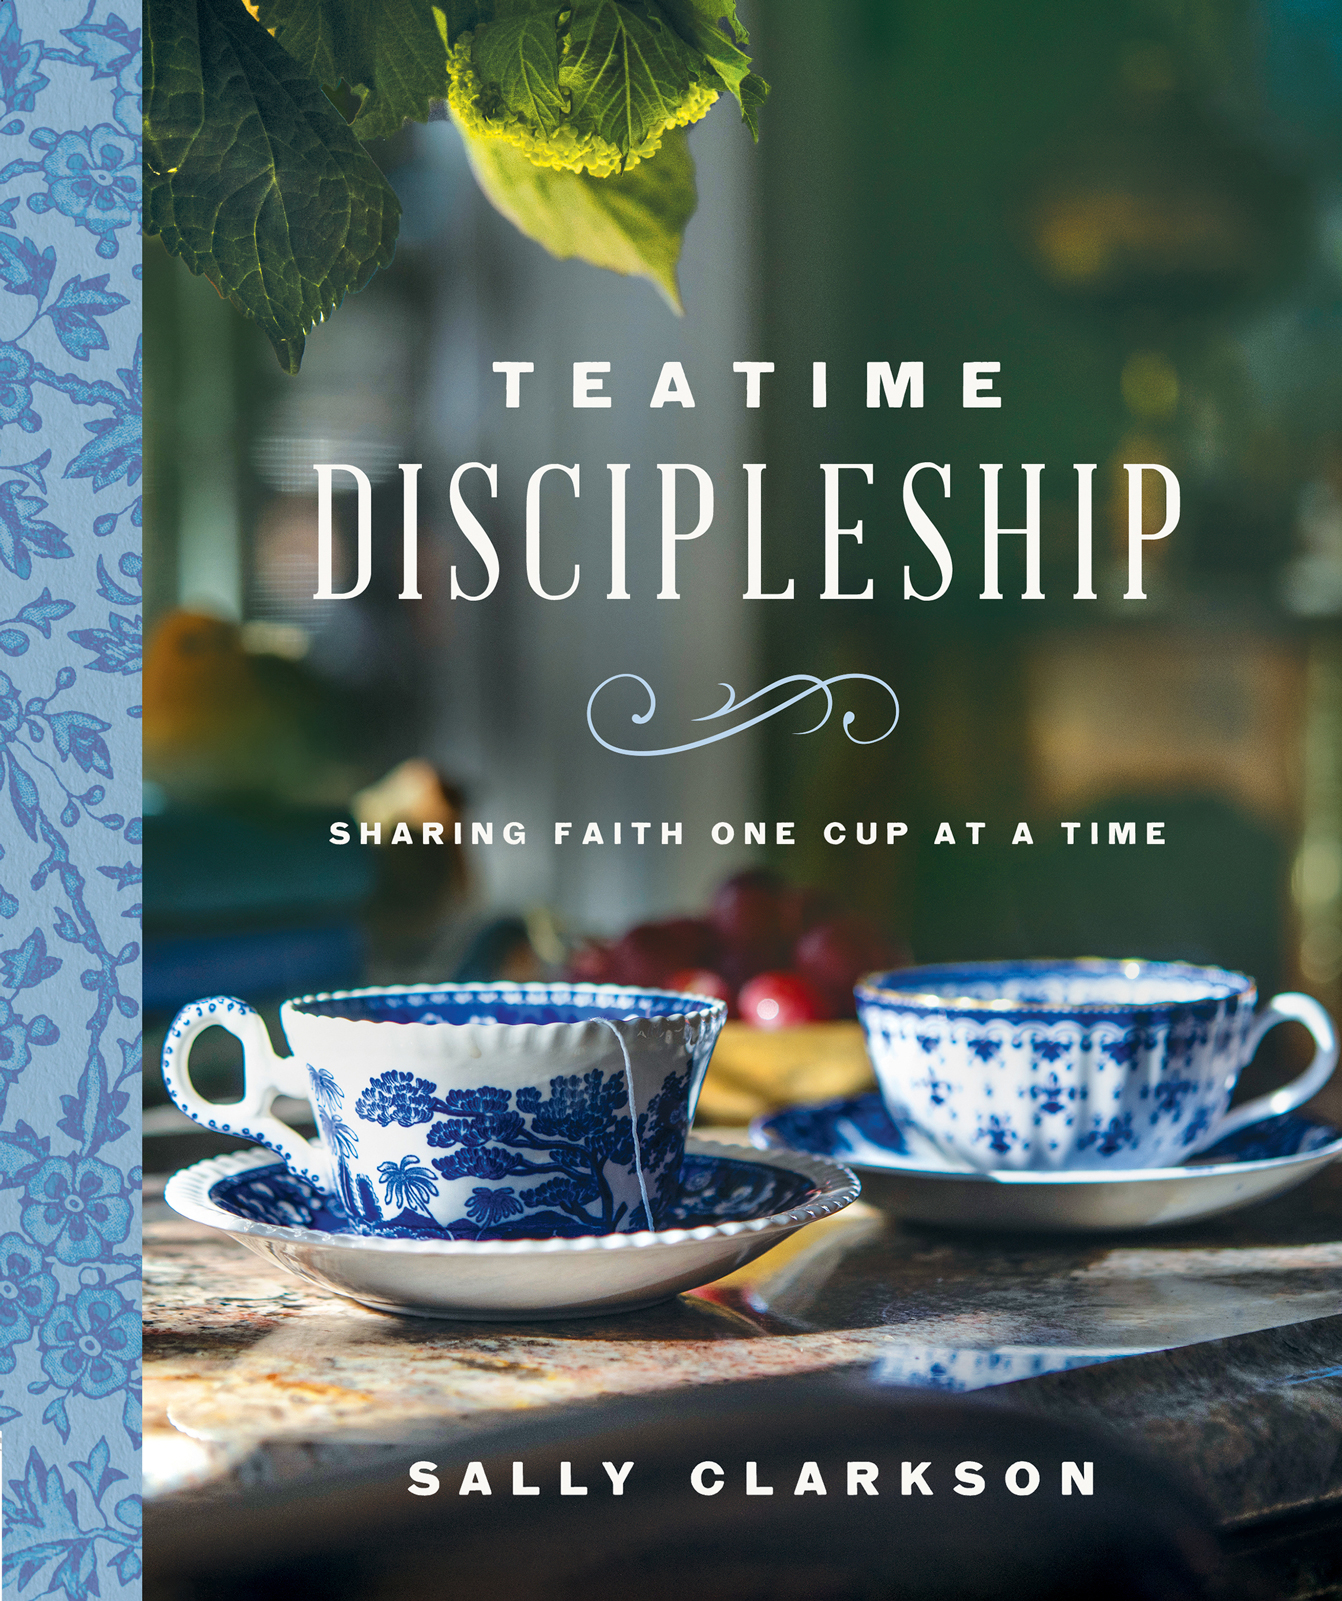 Teatime Discipleship